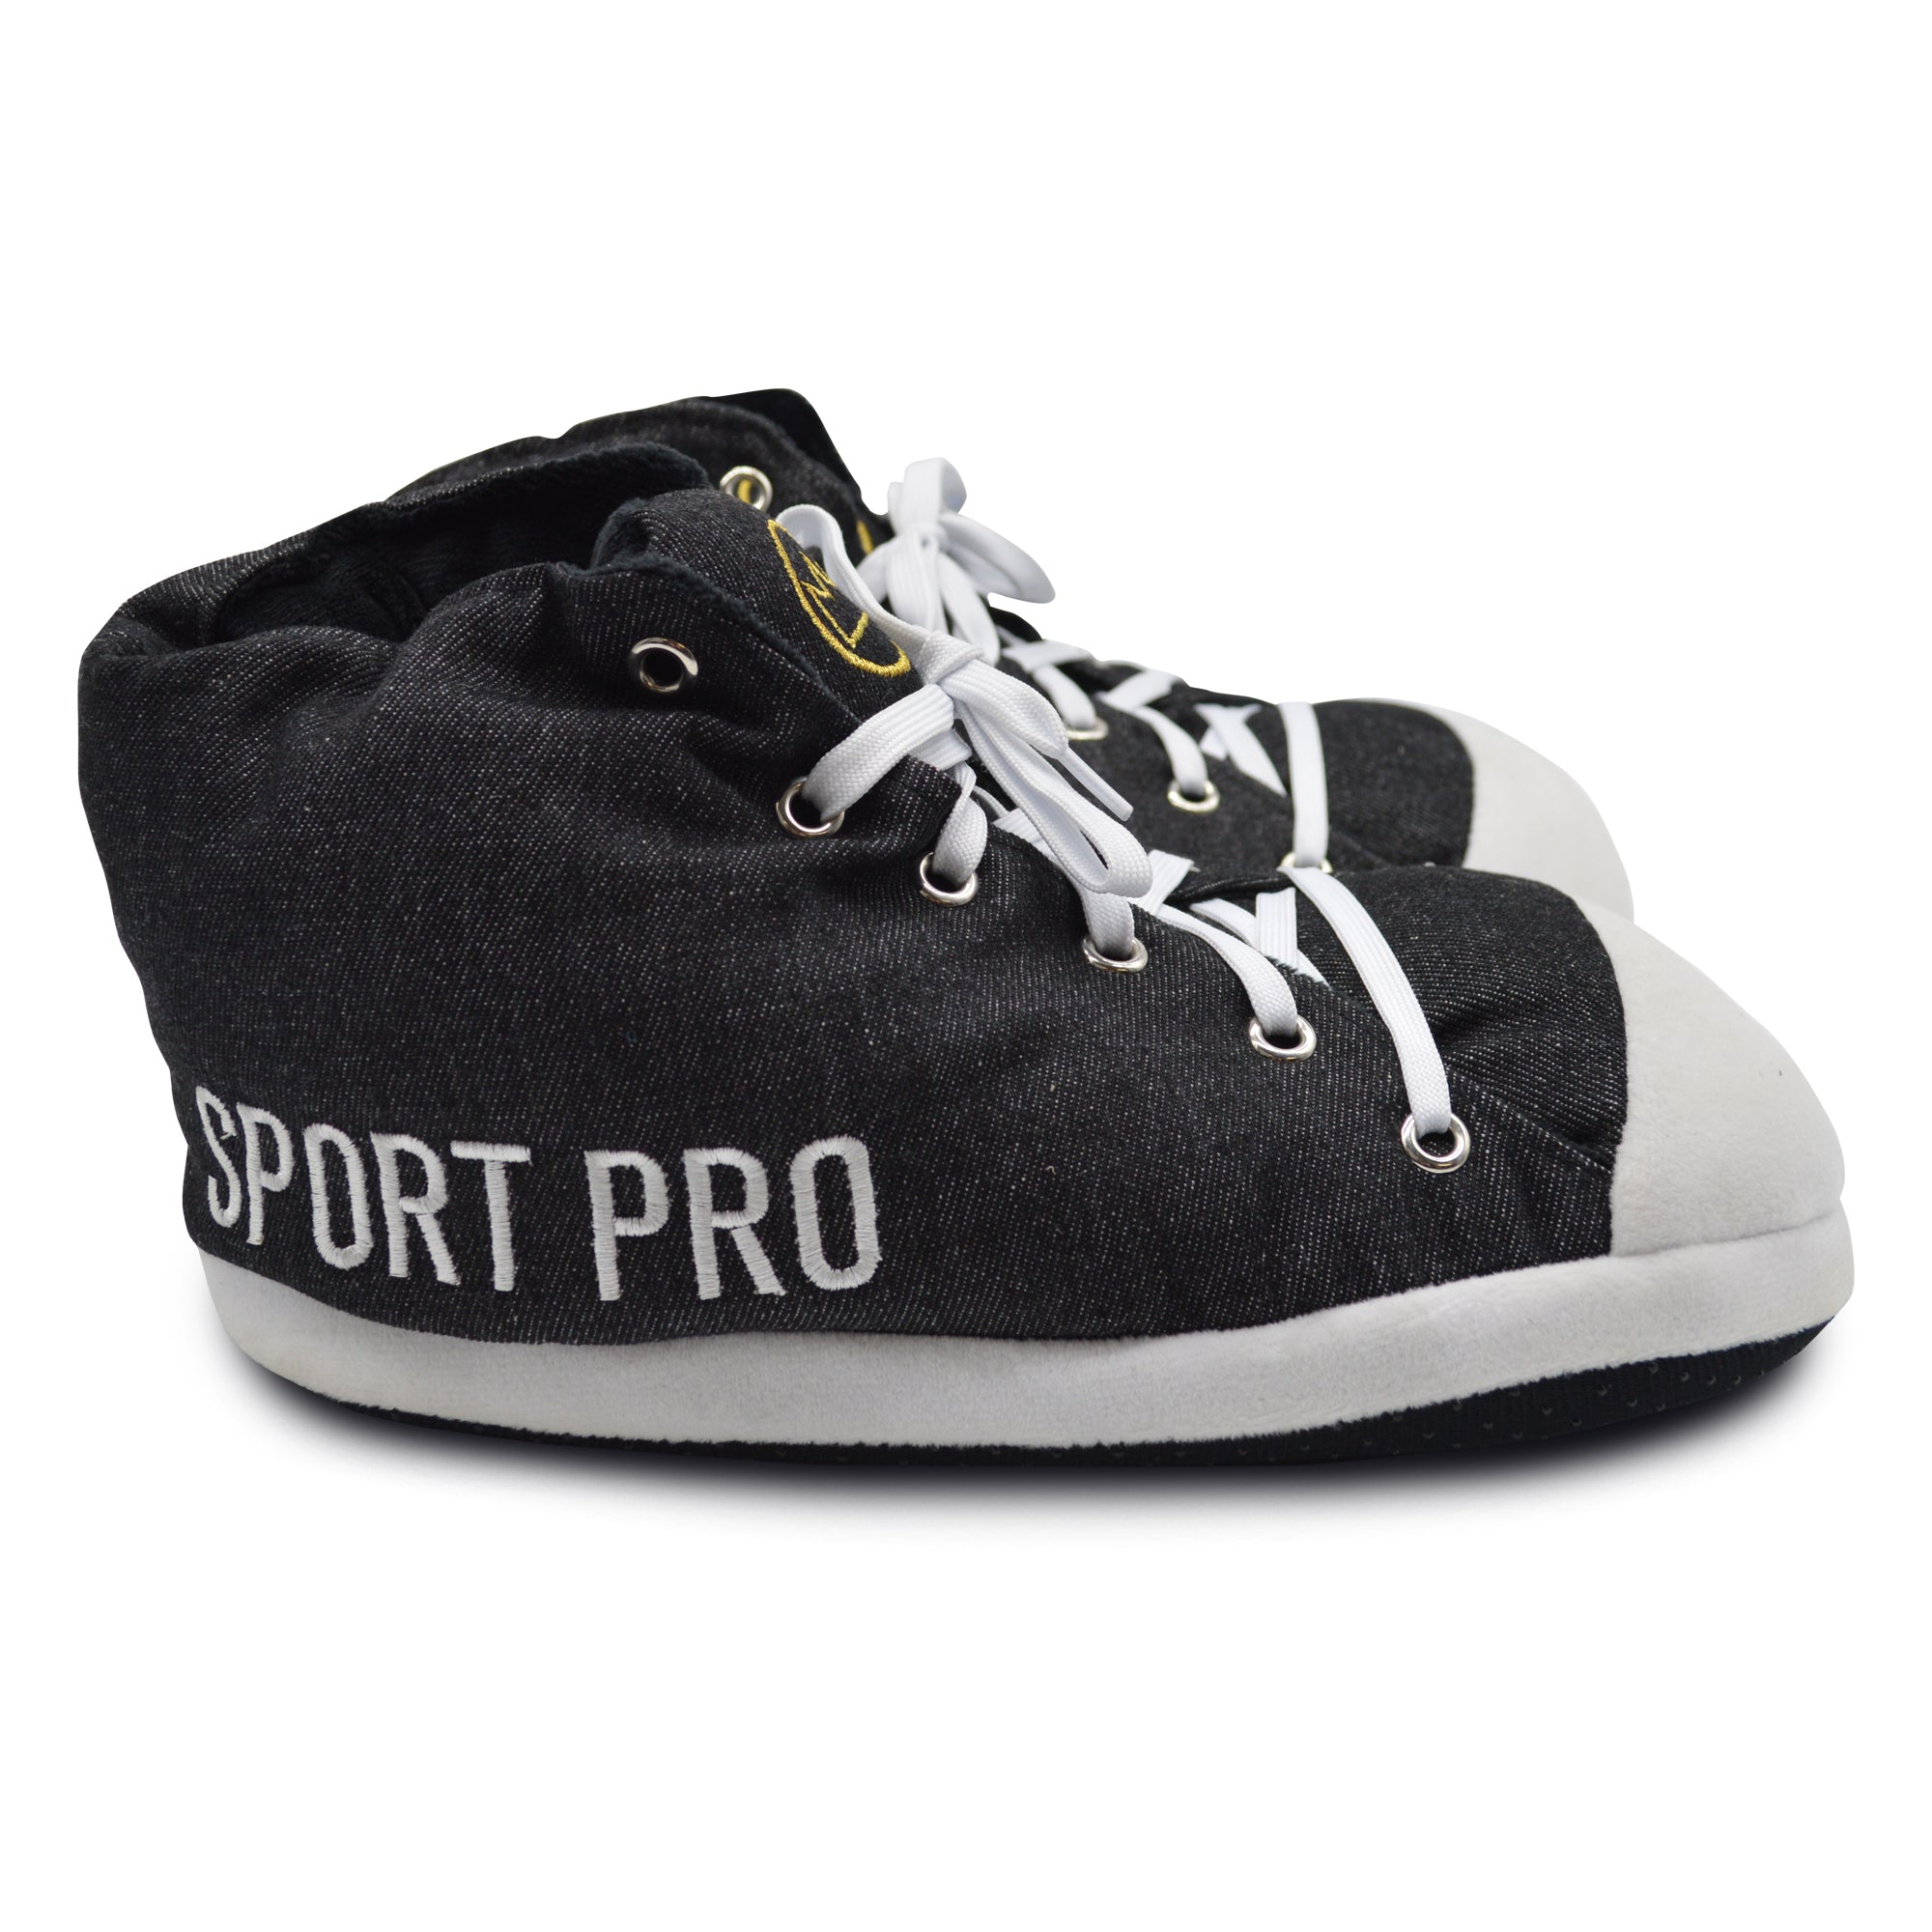 Baffies - Krazy Kicks - Sport Pro - Slippers - Small